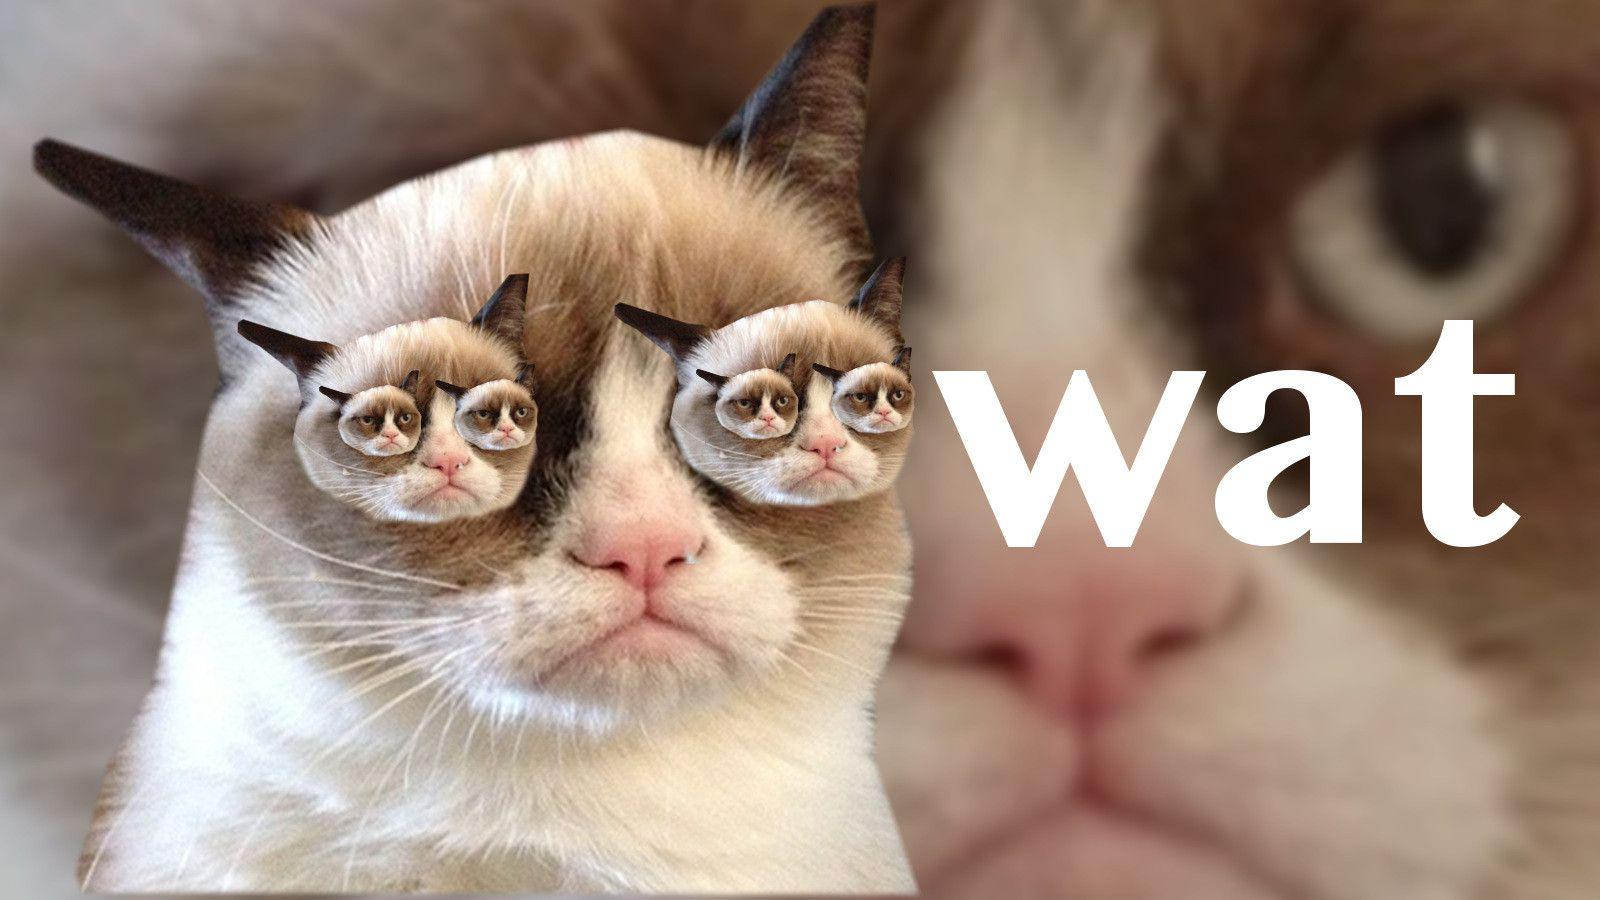 Grumpy Cat Desktop Wallpaper